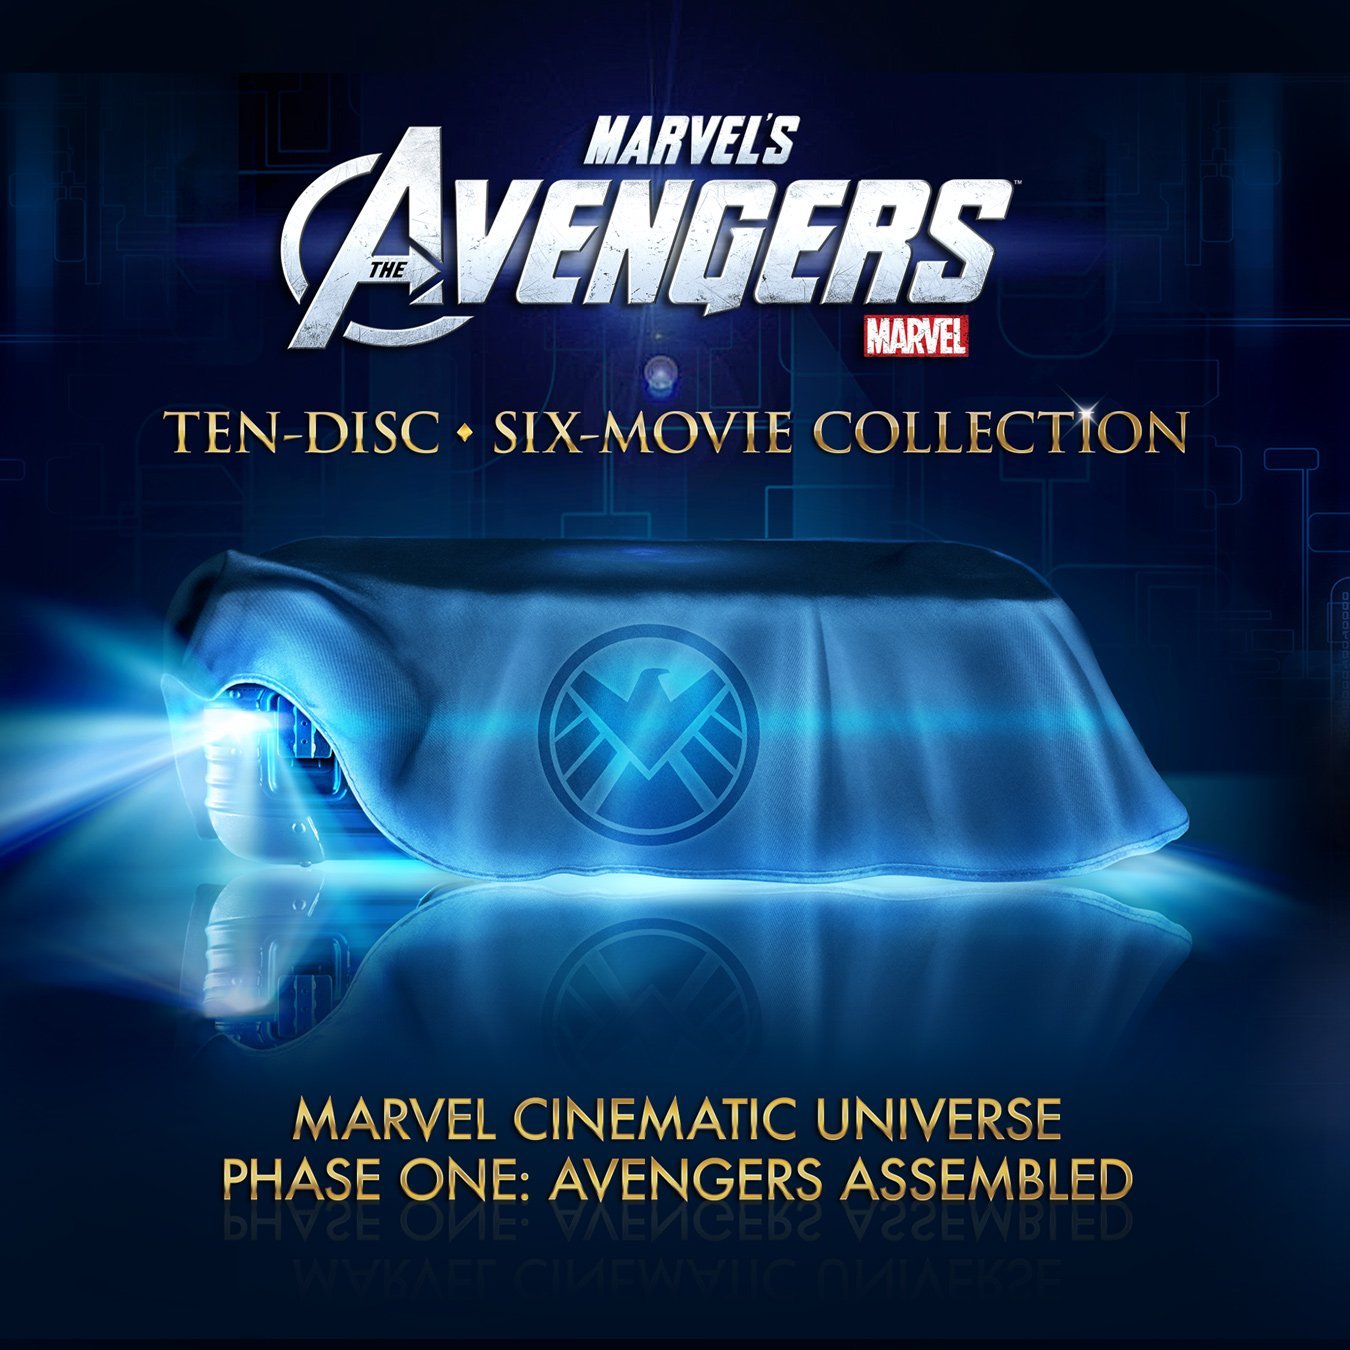 Marvel's Avengers, Image Credit: Amazon